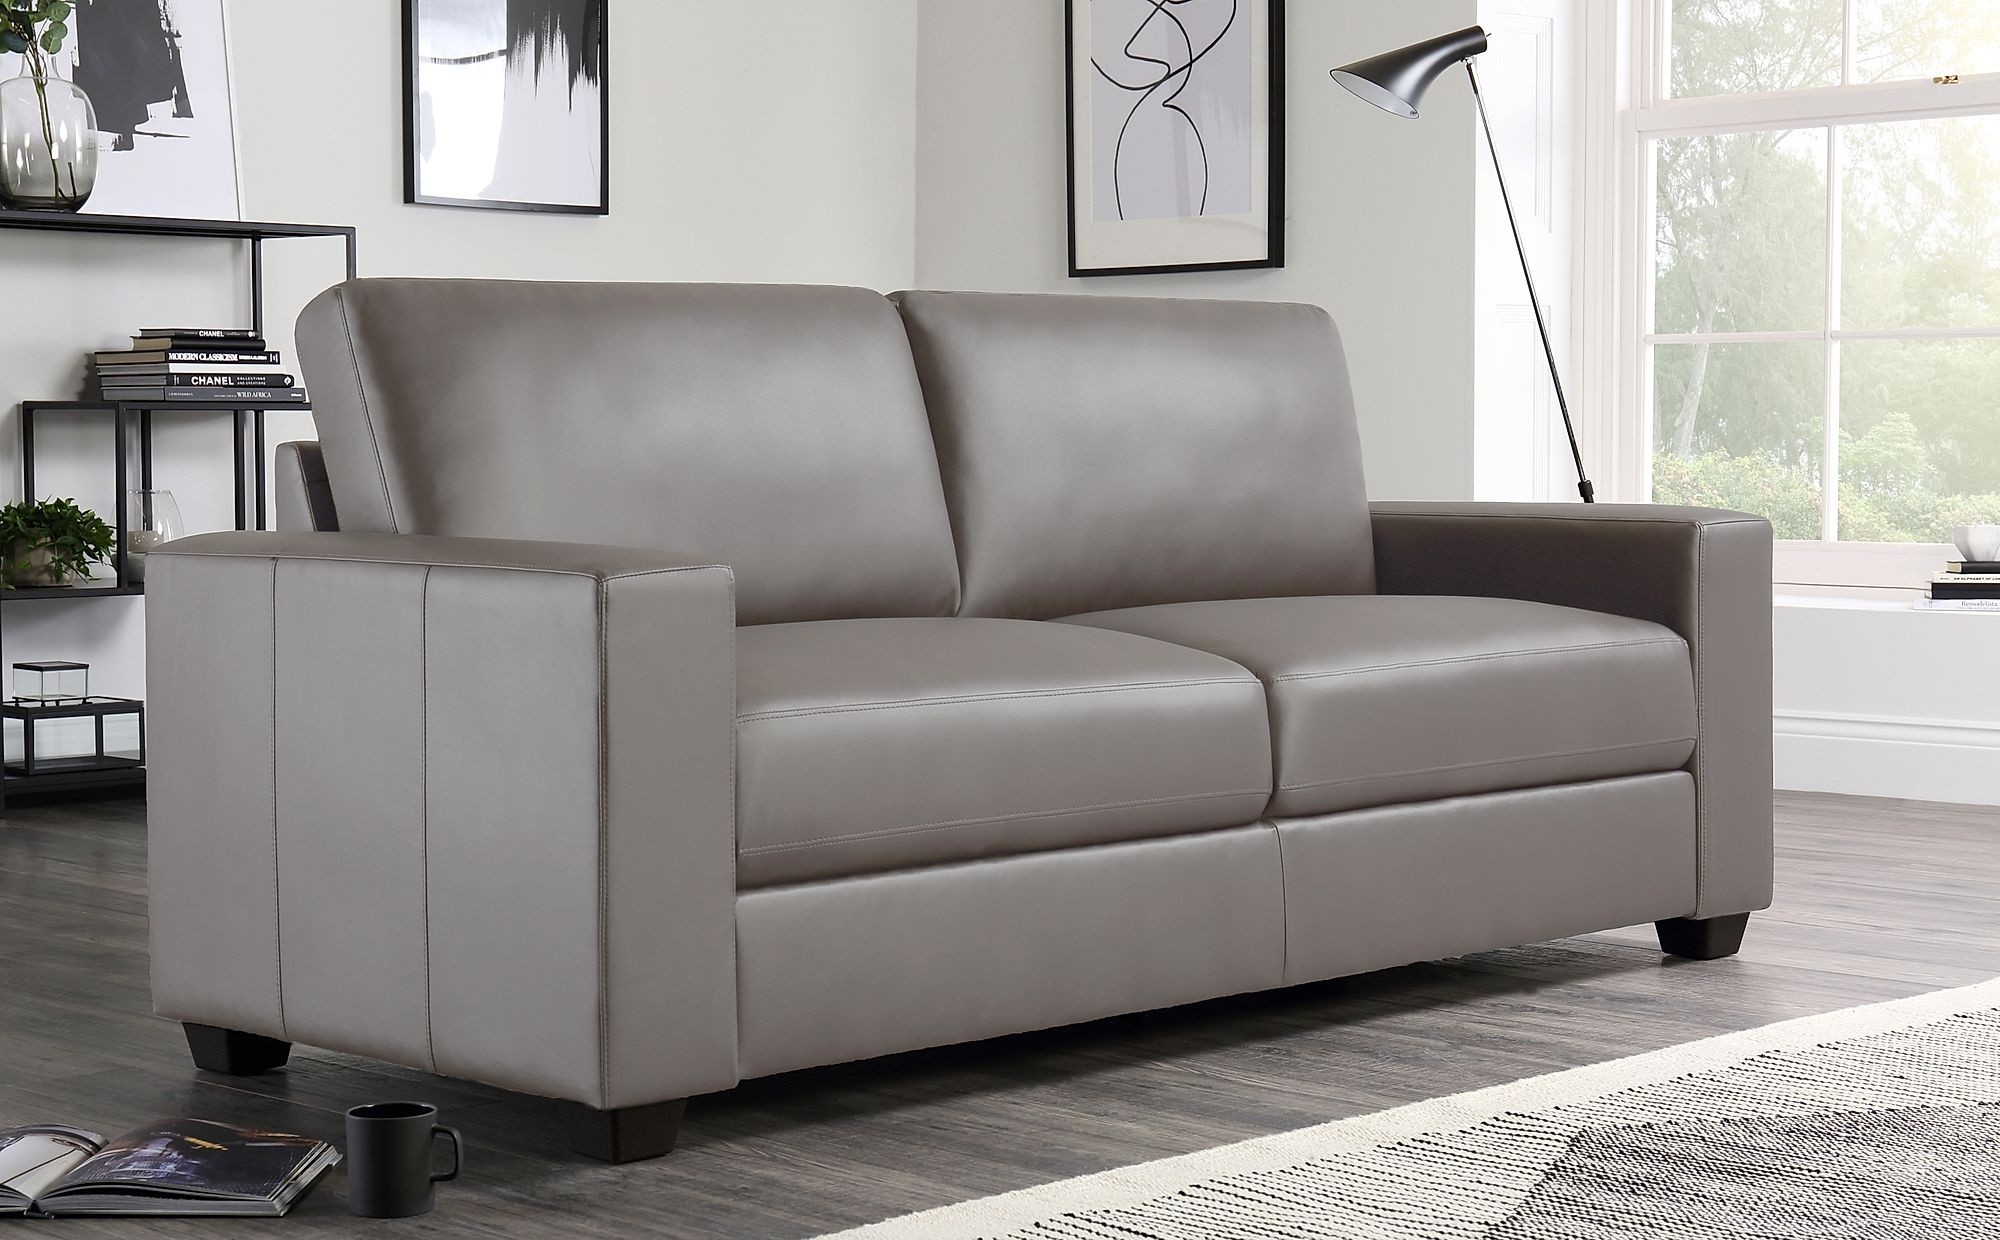 Mission taupe leather 3 seater sofa furniture choice